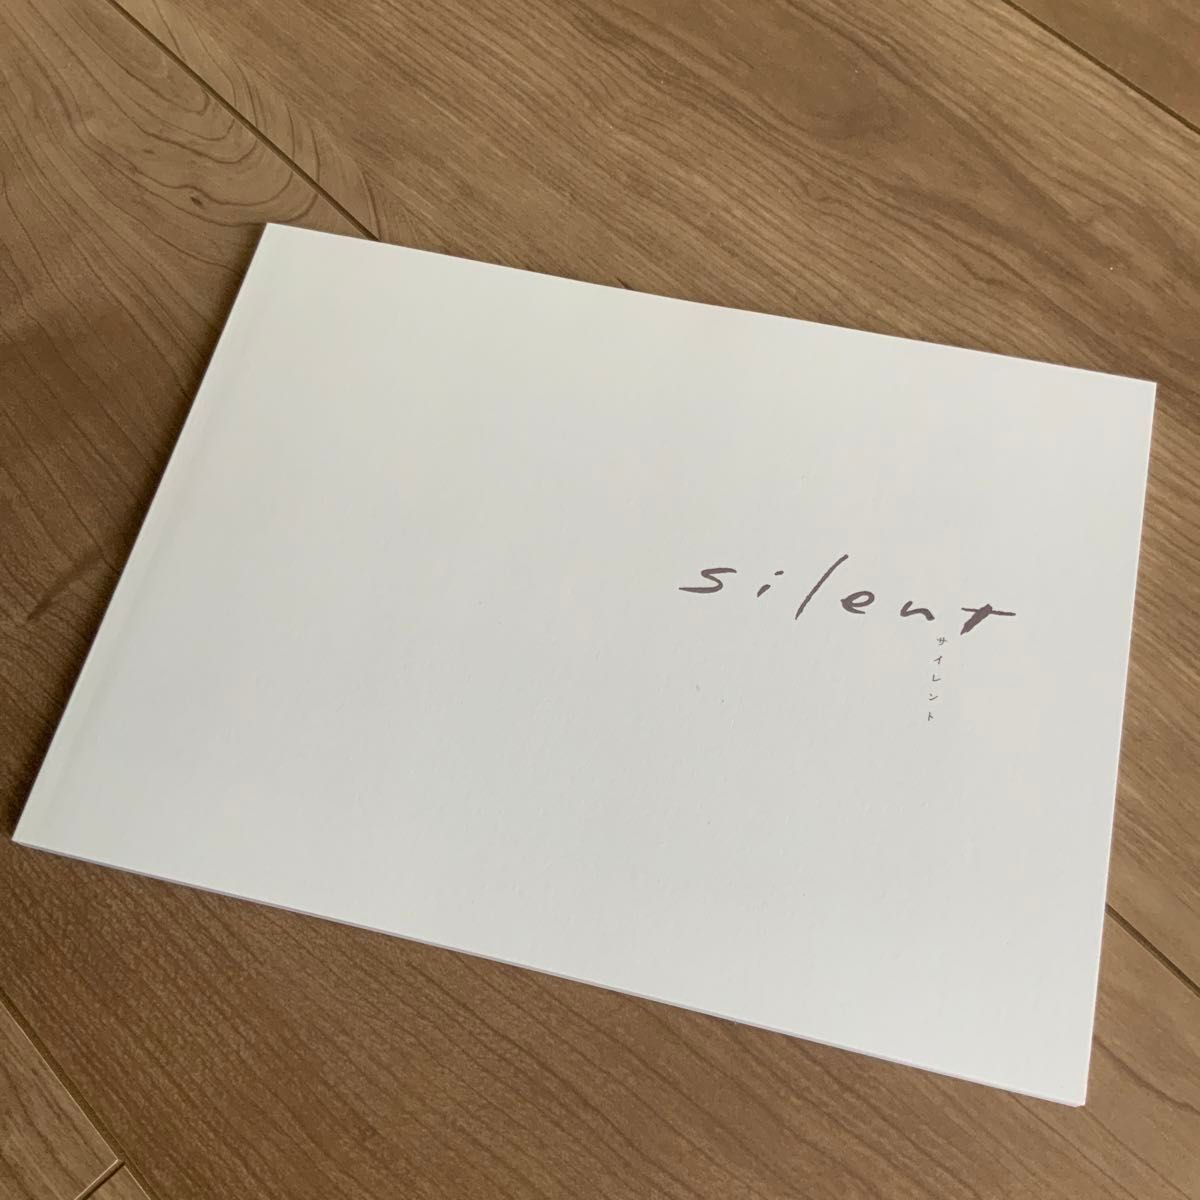 silent -ディレクターズカット版- DVD-BOX